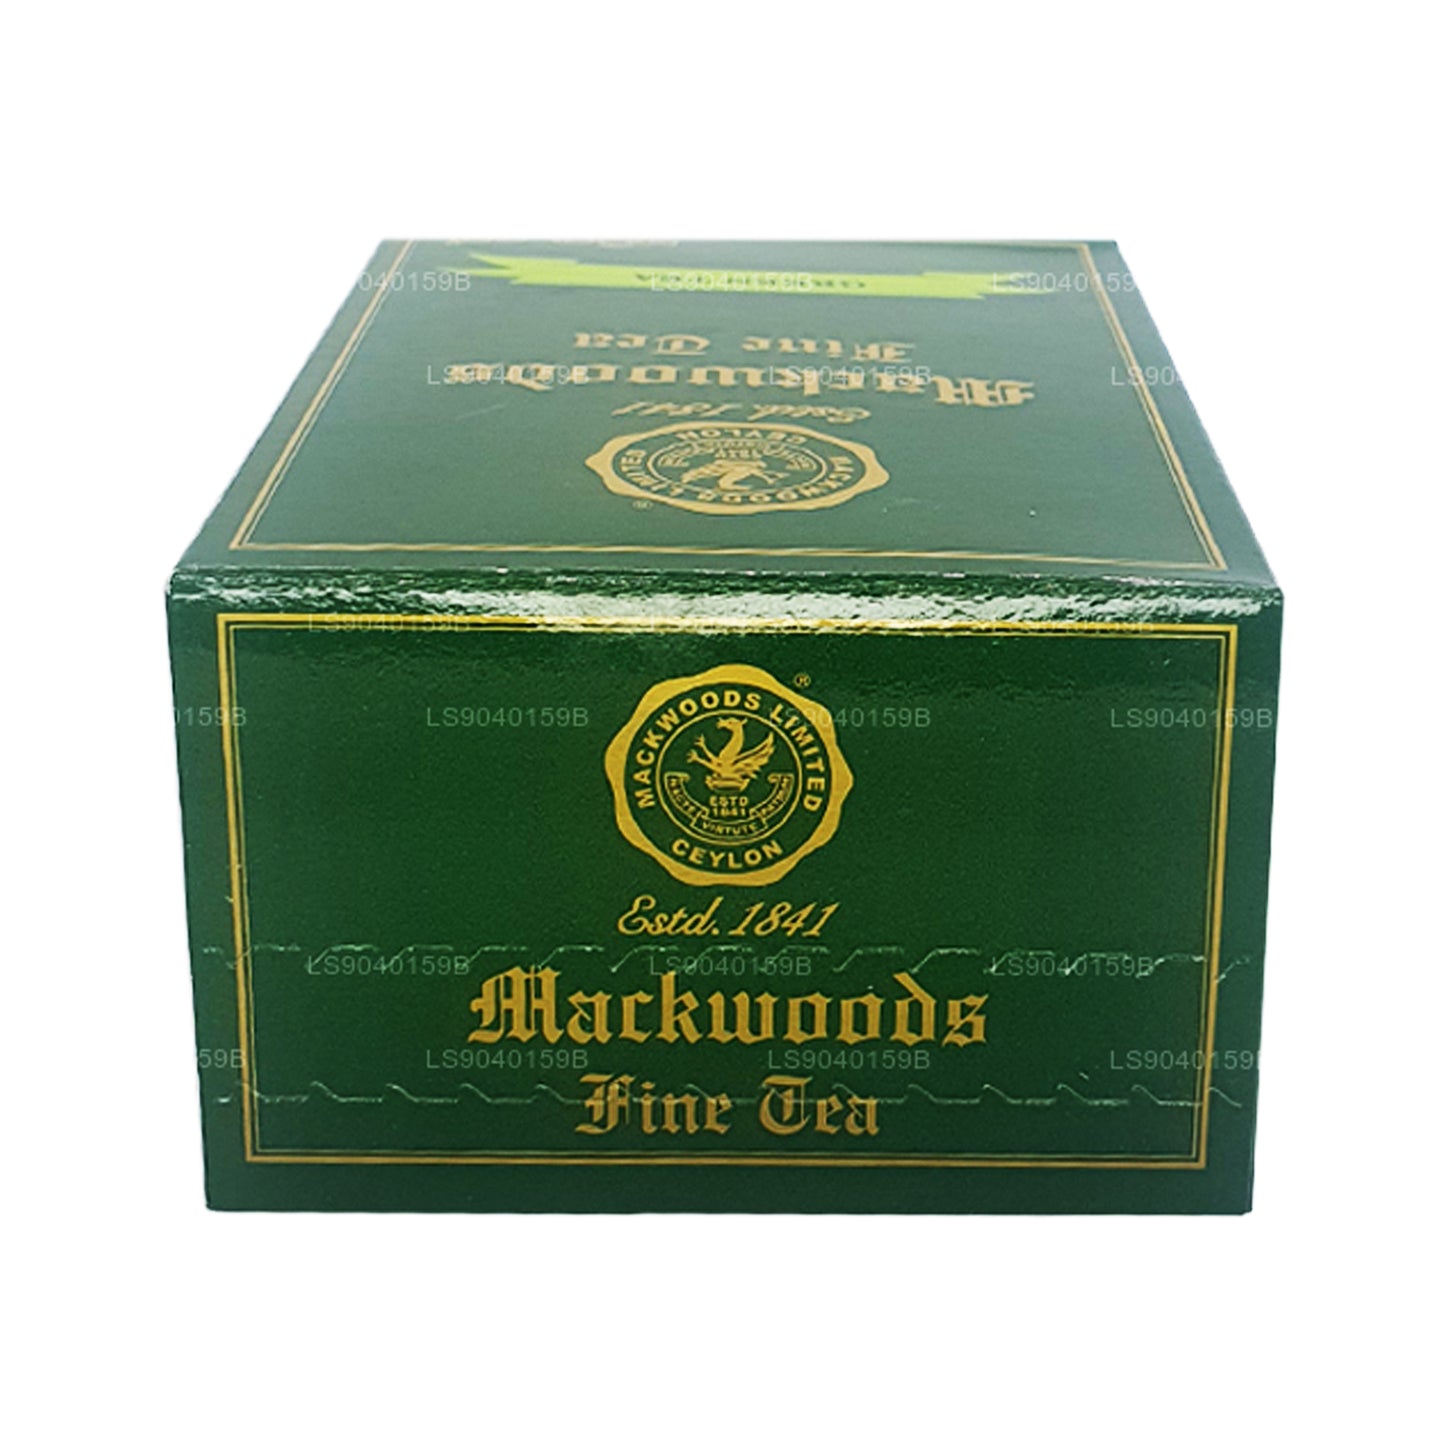 Mackwoods Herbata zielona sypka liściasta (100g)